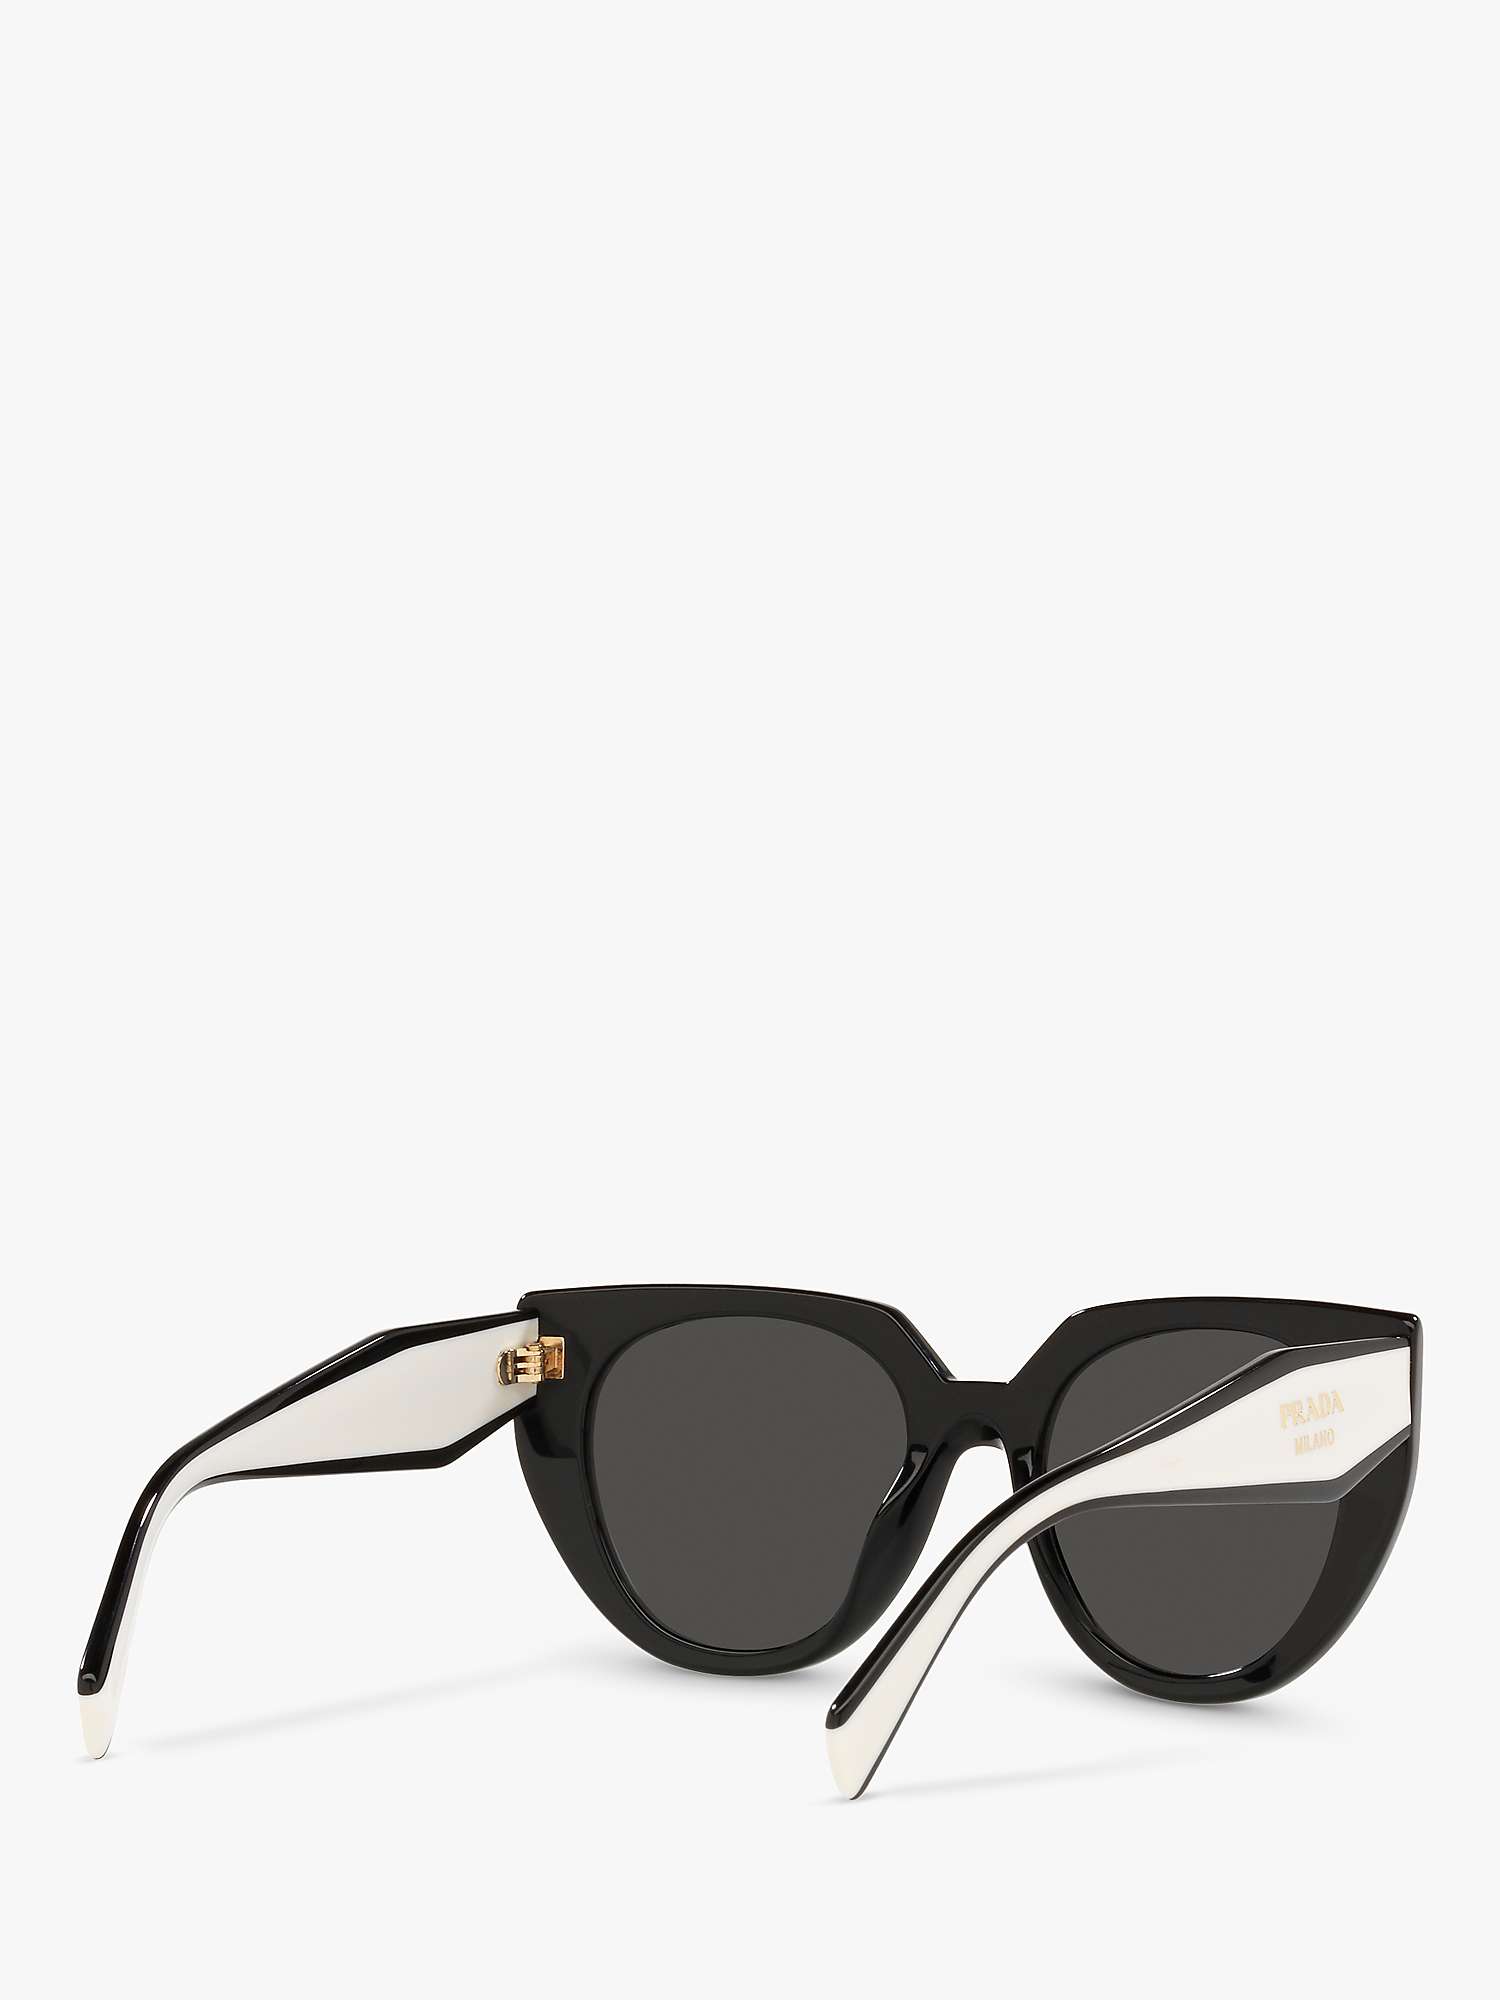 Buy Prada PR 14WS Women's Cat's Eye Sunglasses, Black Chalk/Black Online at johnlewis.com